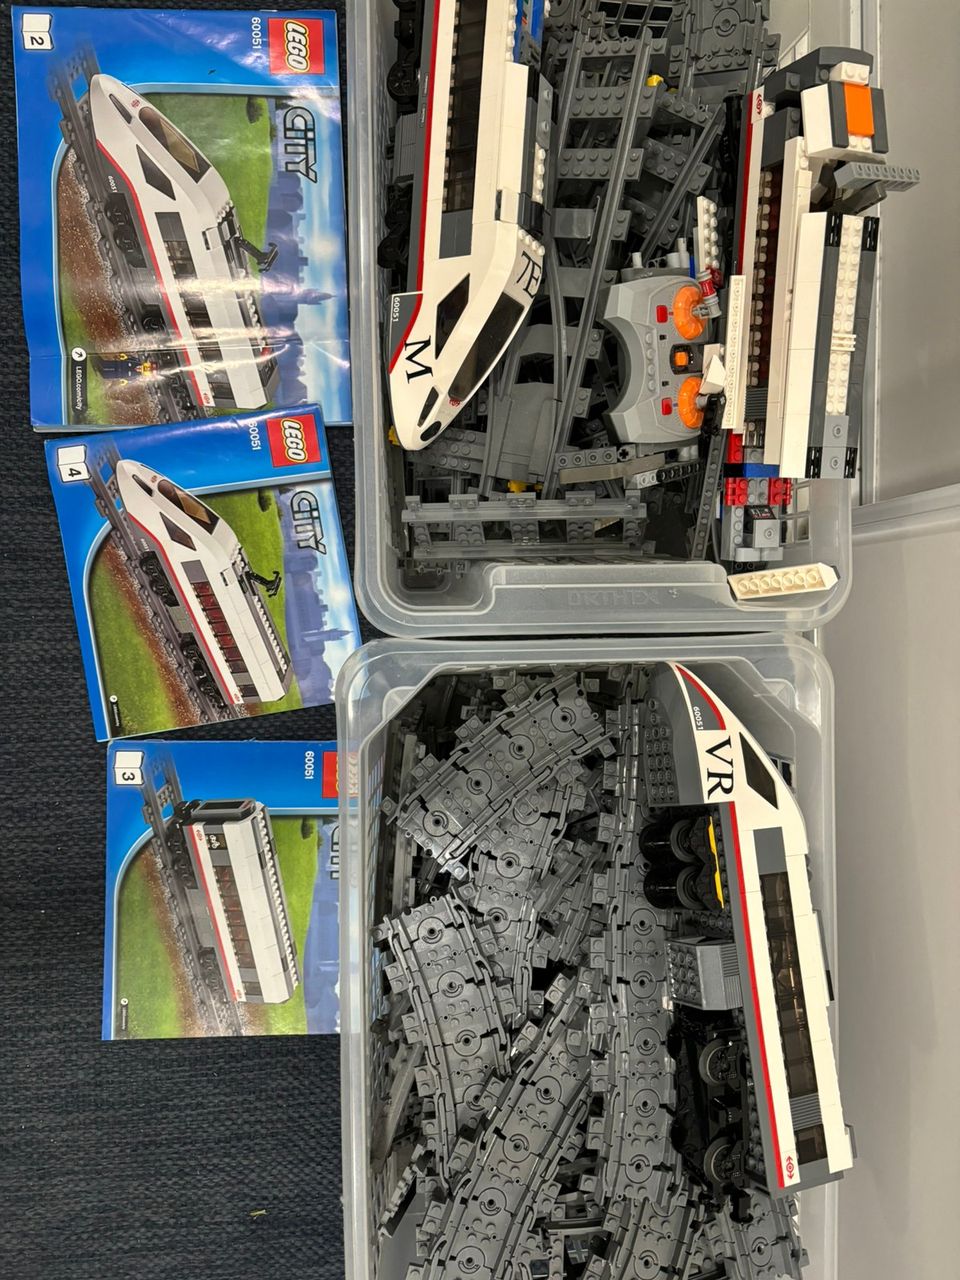 Lego juna ja lego junaraiteita